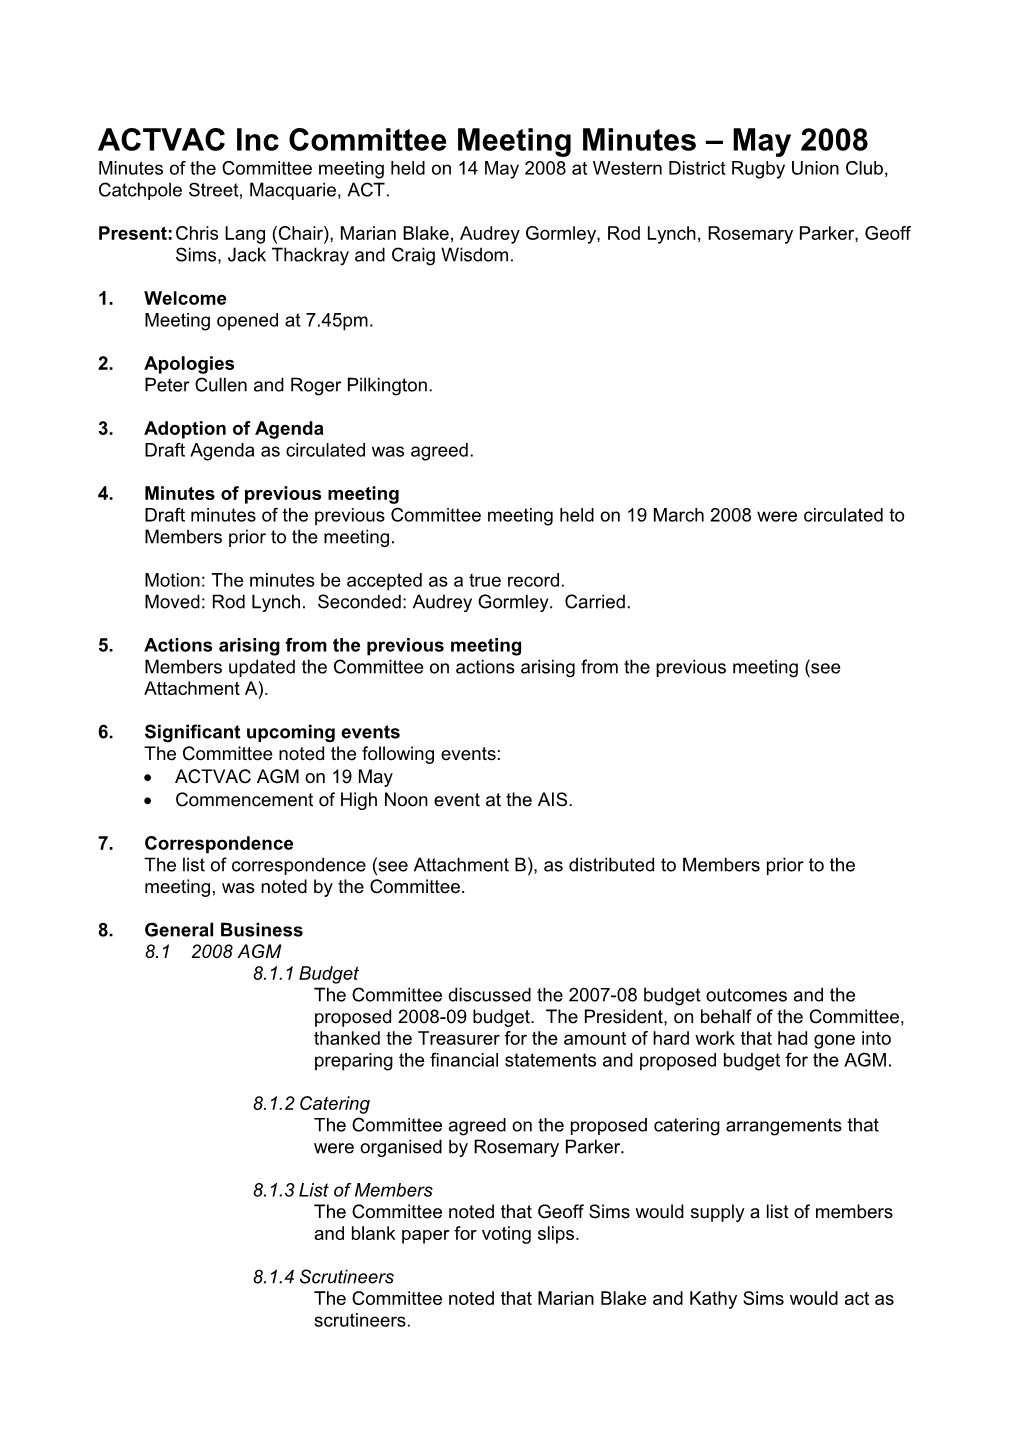 ACTVAC Inc Committee Meeting Minutes May 2008